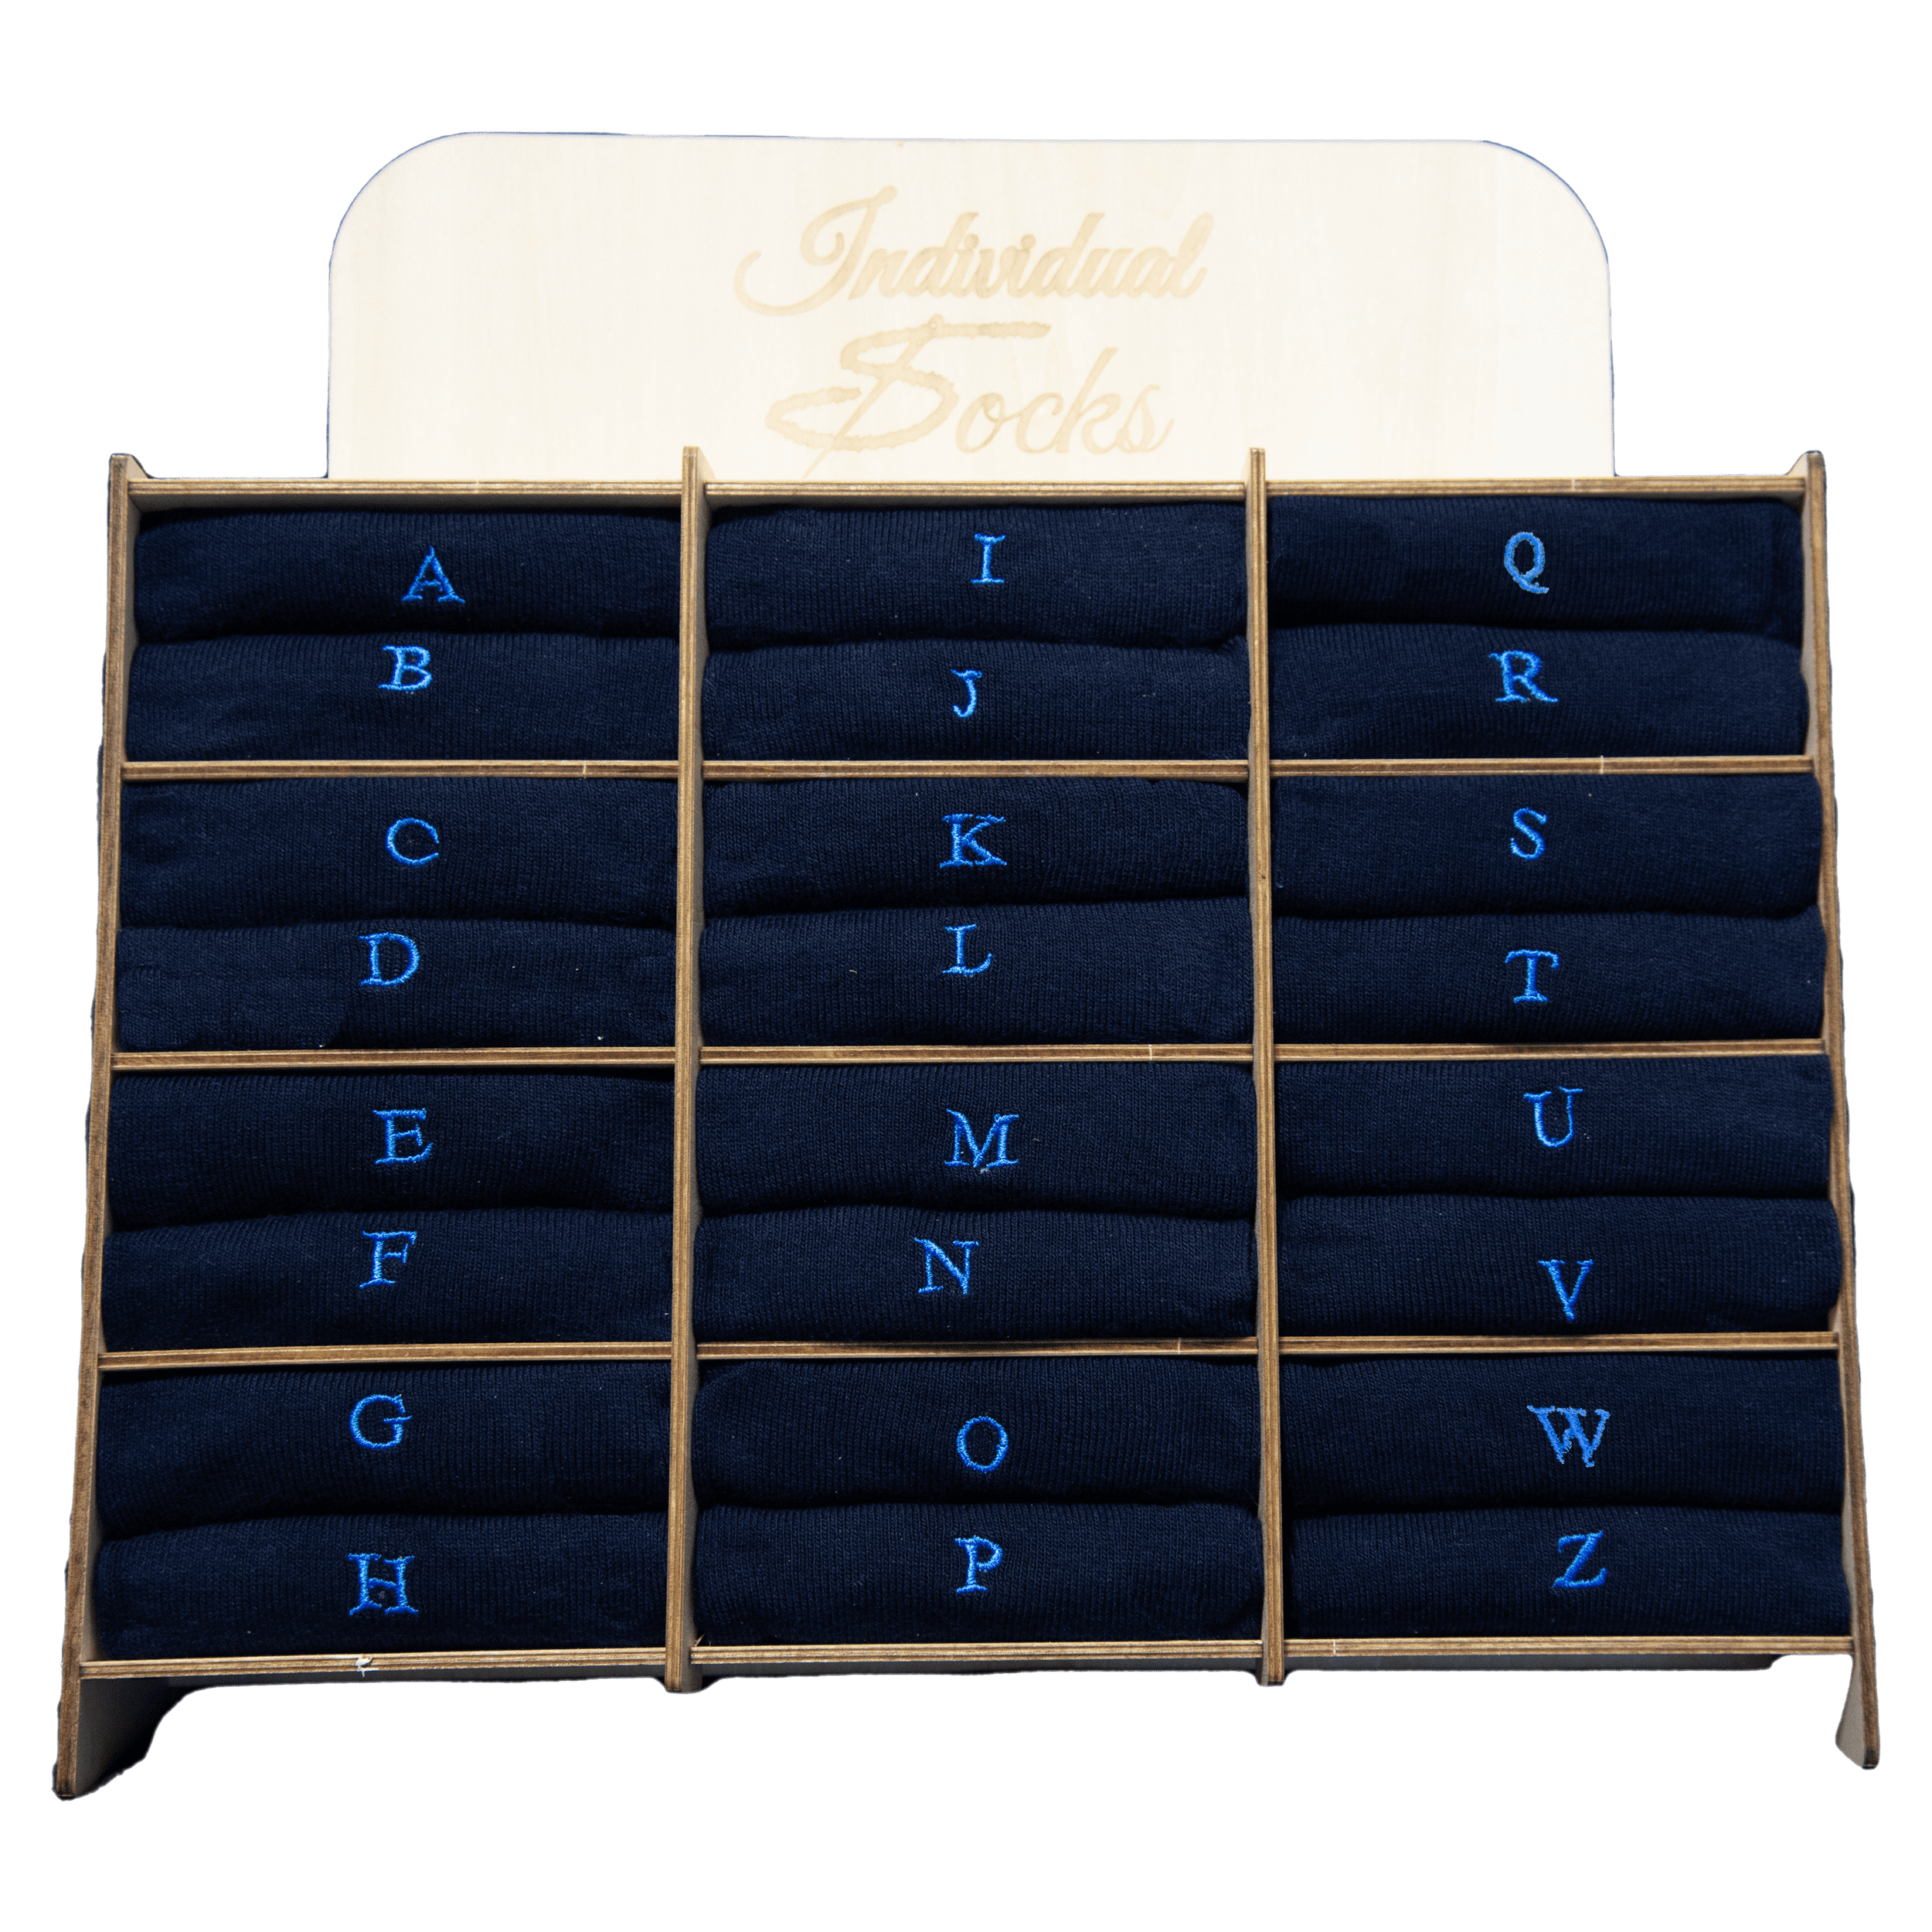 Calze Blu Uomo iniziali Royal - Cotone Stretch - Taglia 40/45 - 133